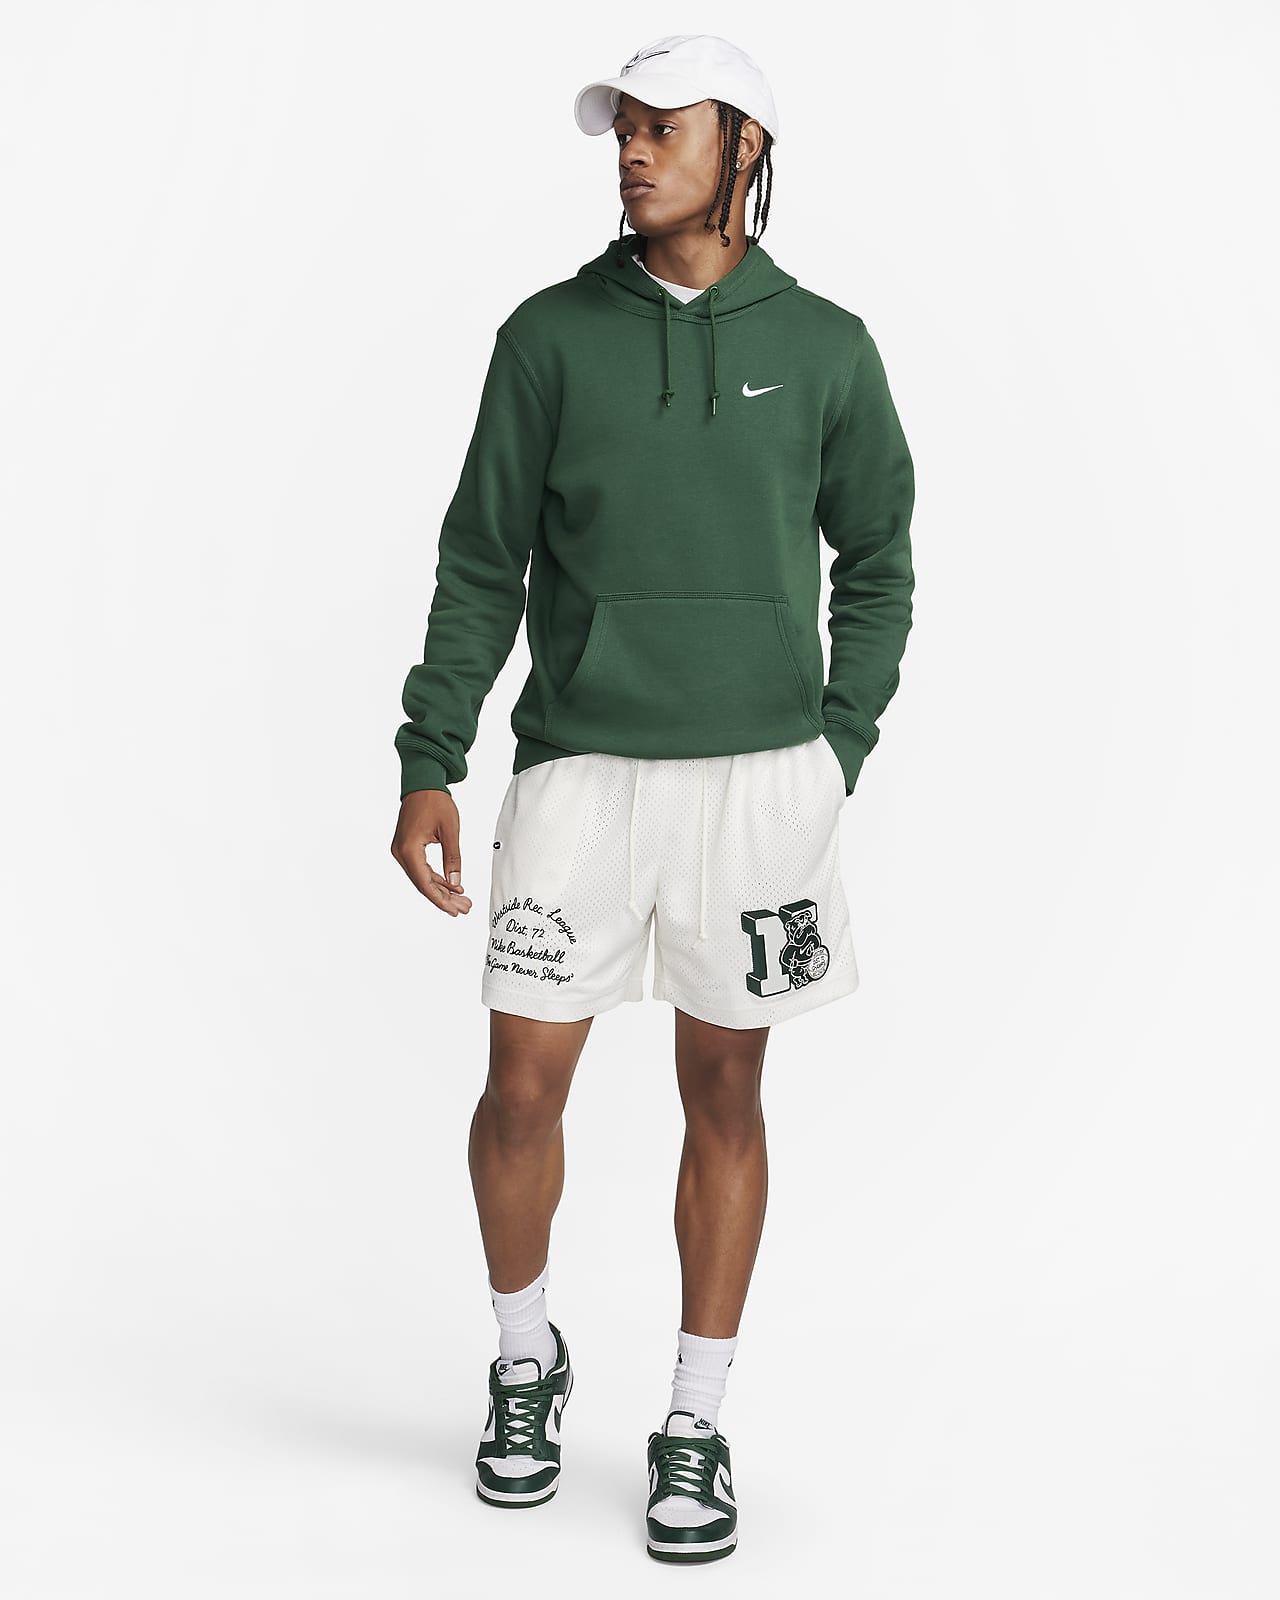 Nike Authentics Men\'s Mesh Shorts